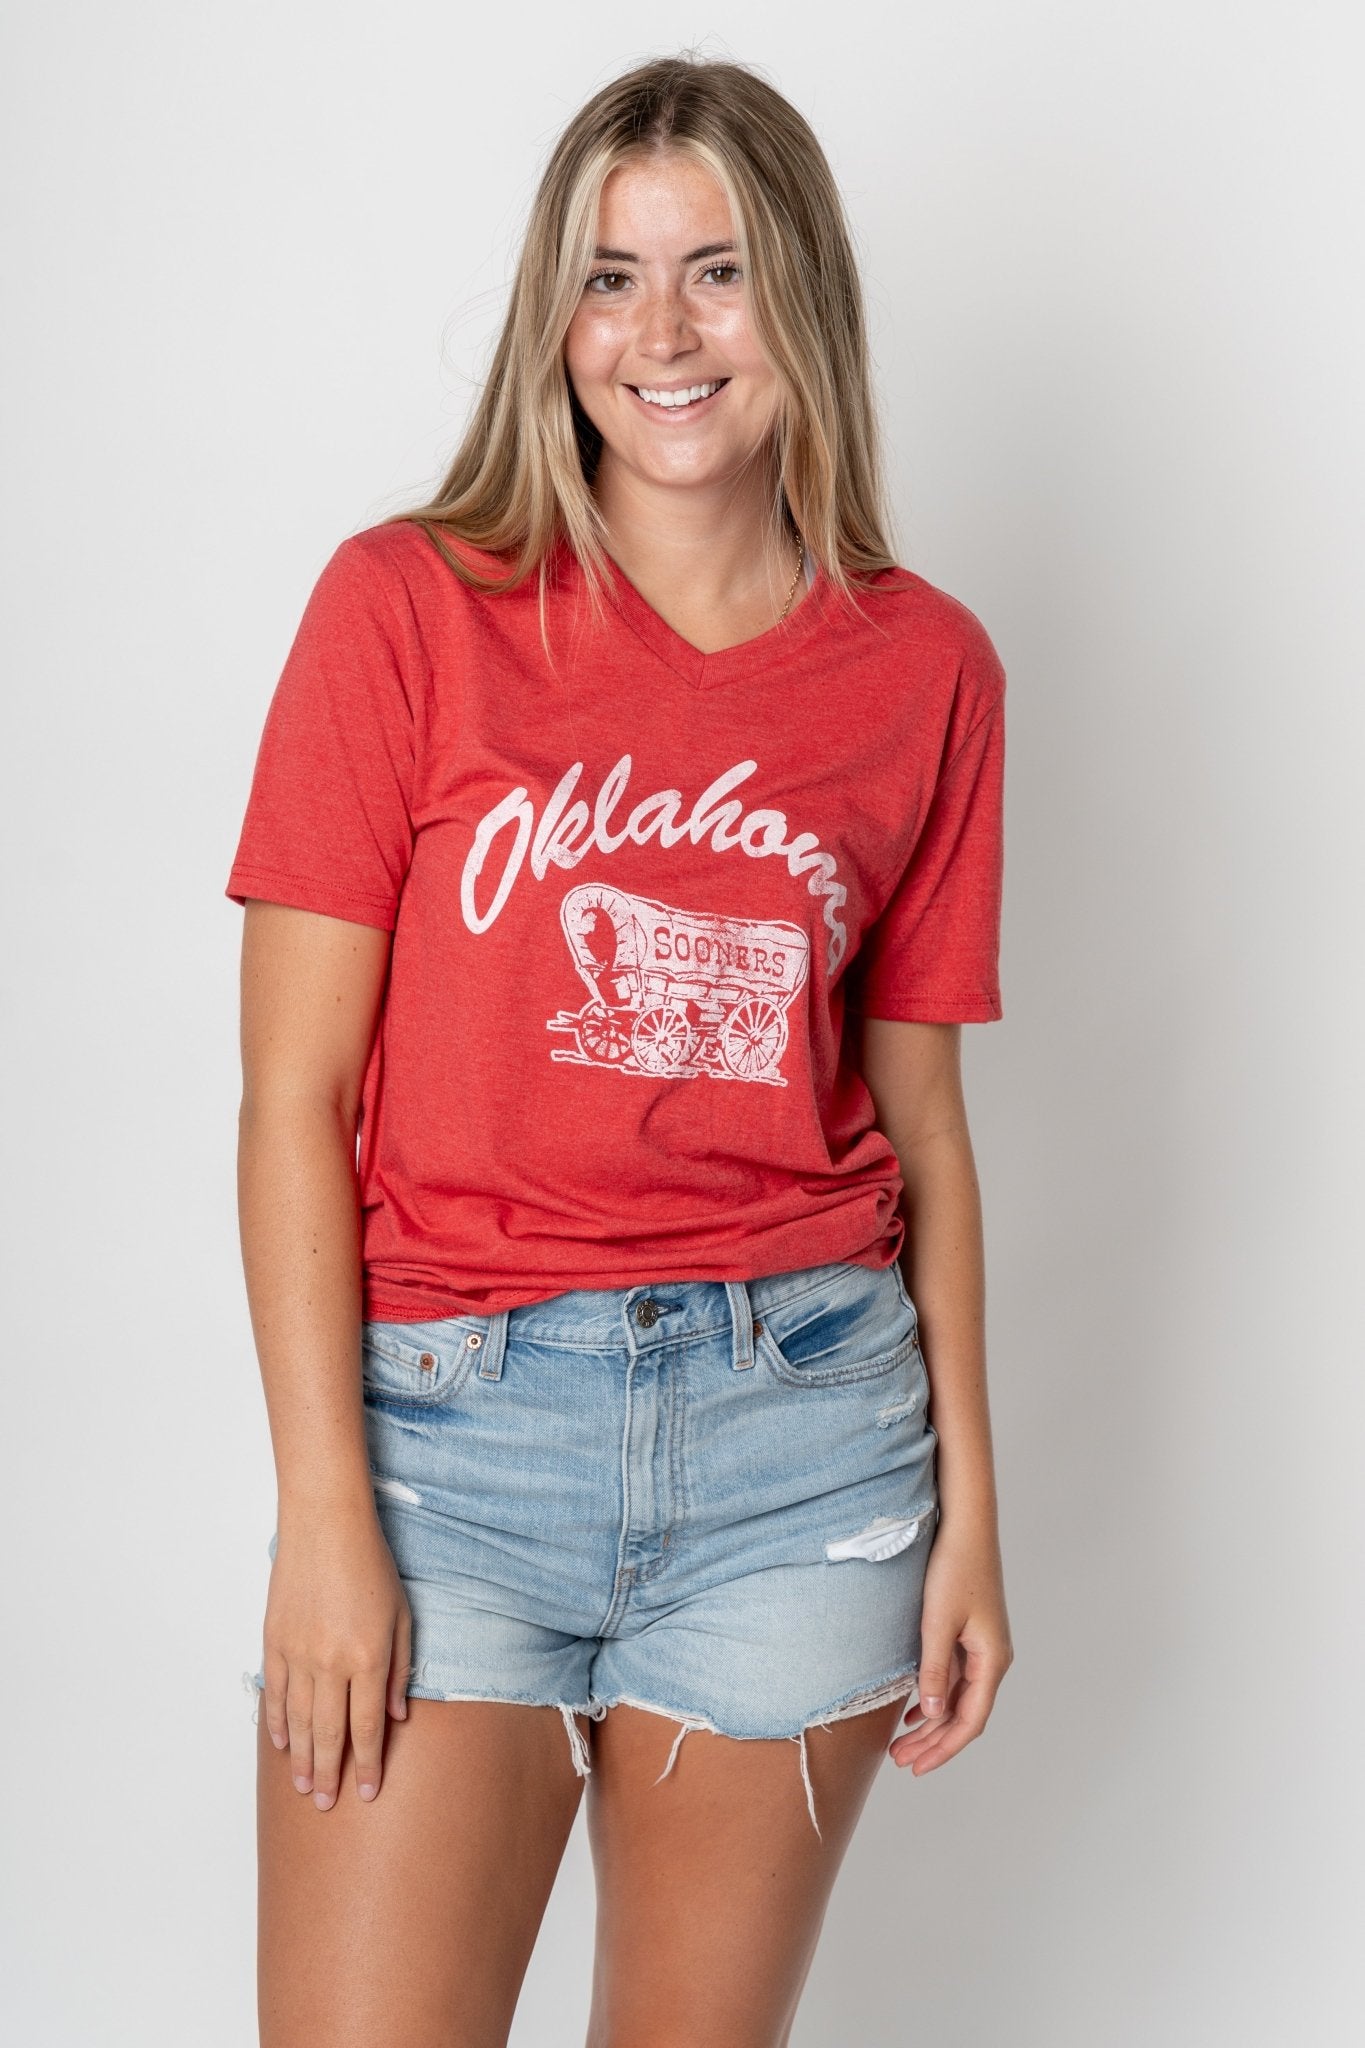 OU OU script schooner unisex v-neck t-shirt red t-shirt | Lush Fashion Lounge Trendy Oklahoma University Sooners Apparel & Cute Gameday T-Shirts